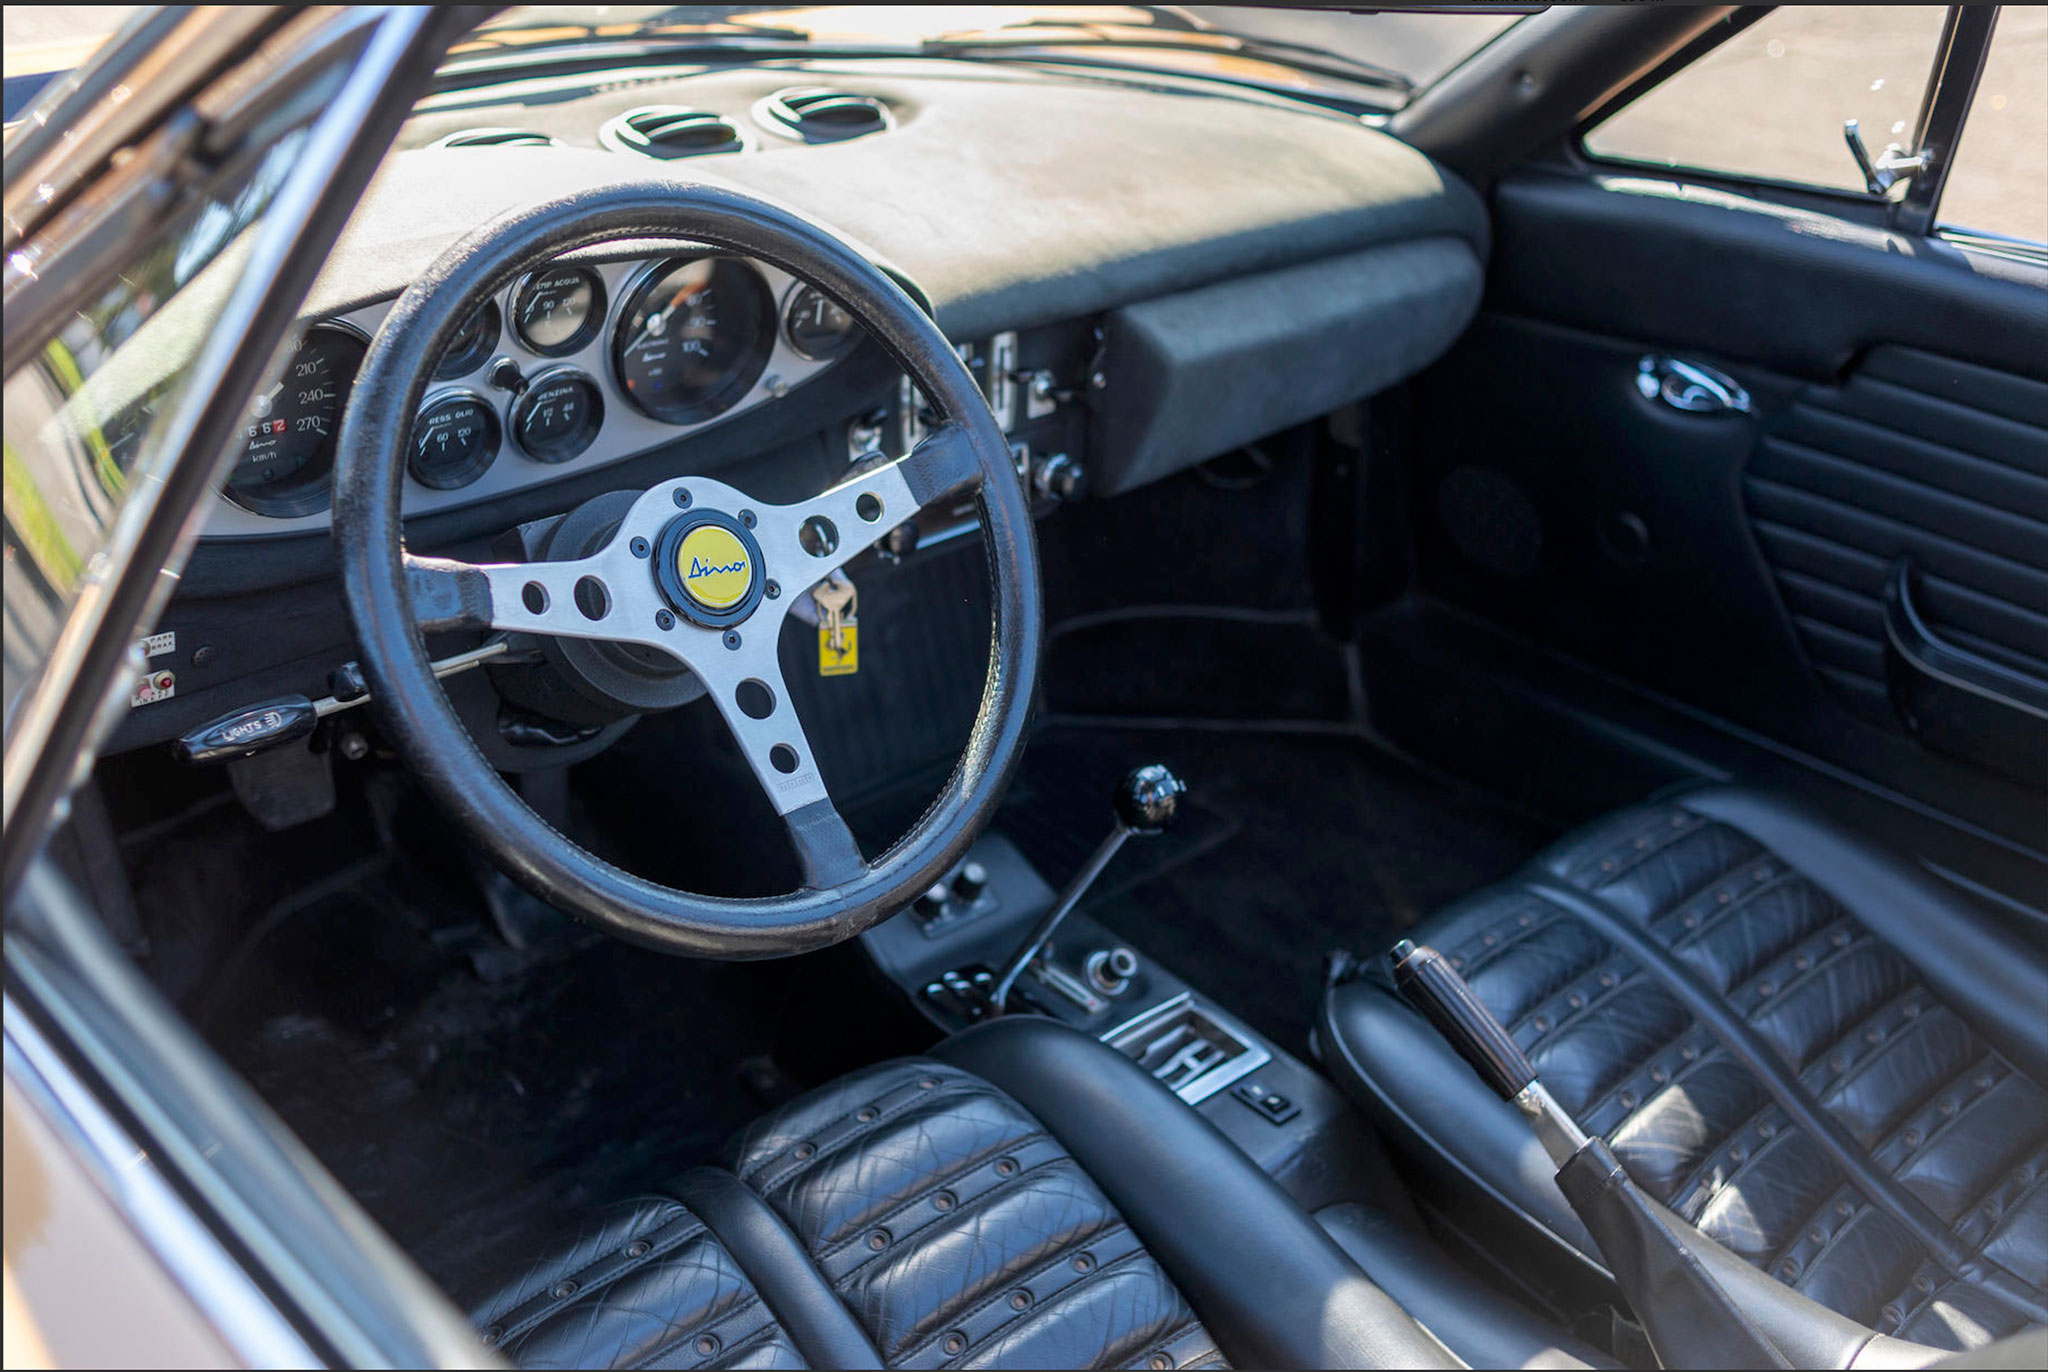 1973 Ferrari Dino 246 GTS sièges en cuir noir, intérieur sportif.